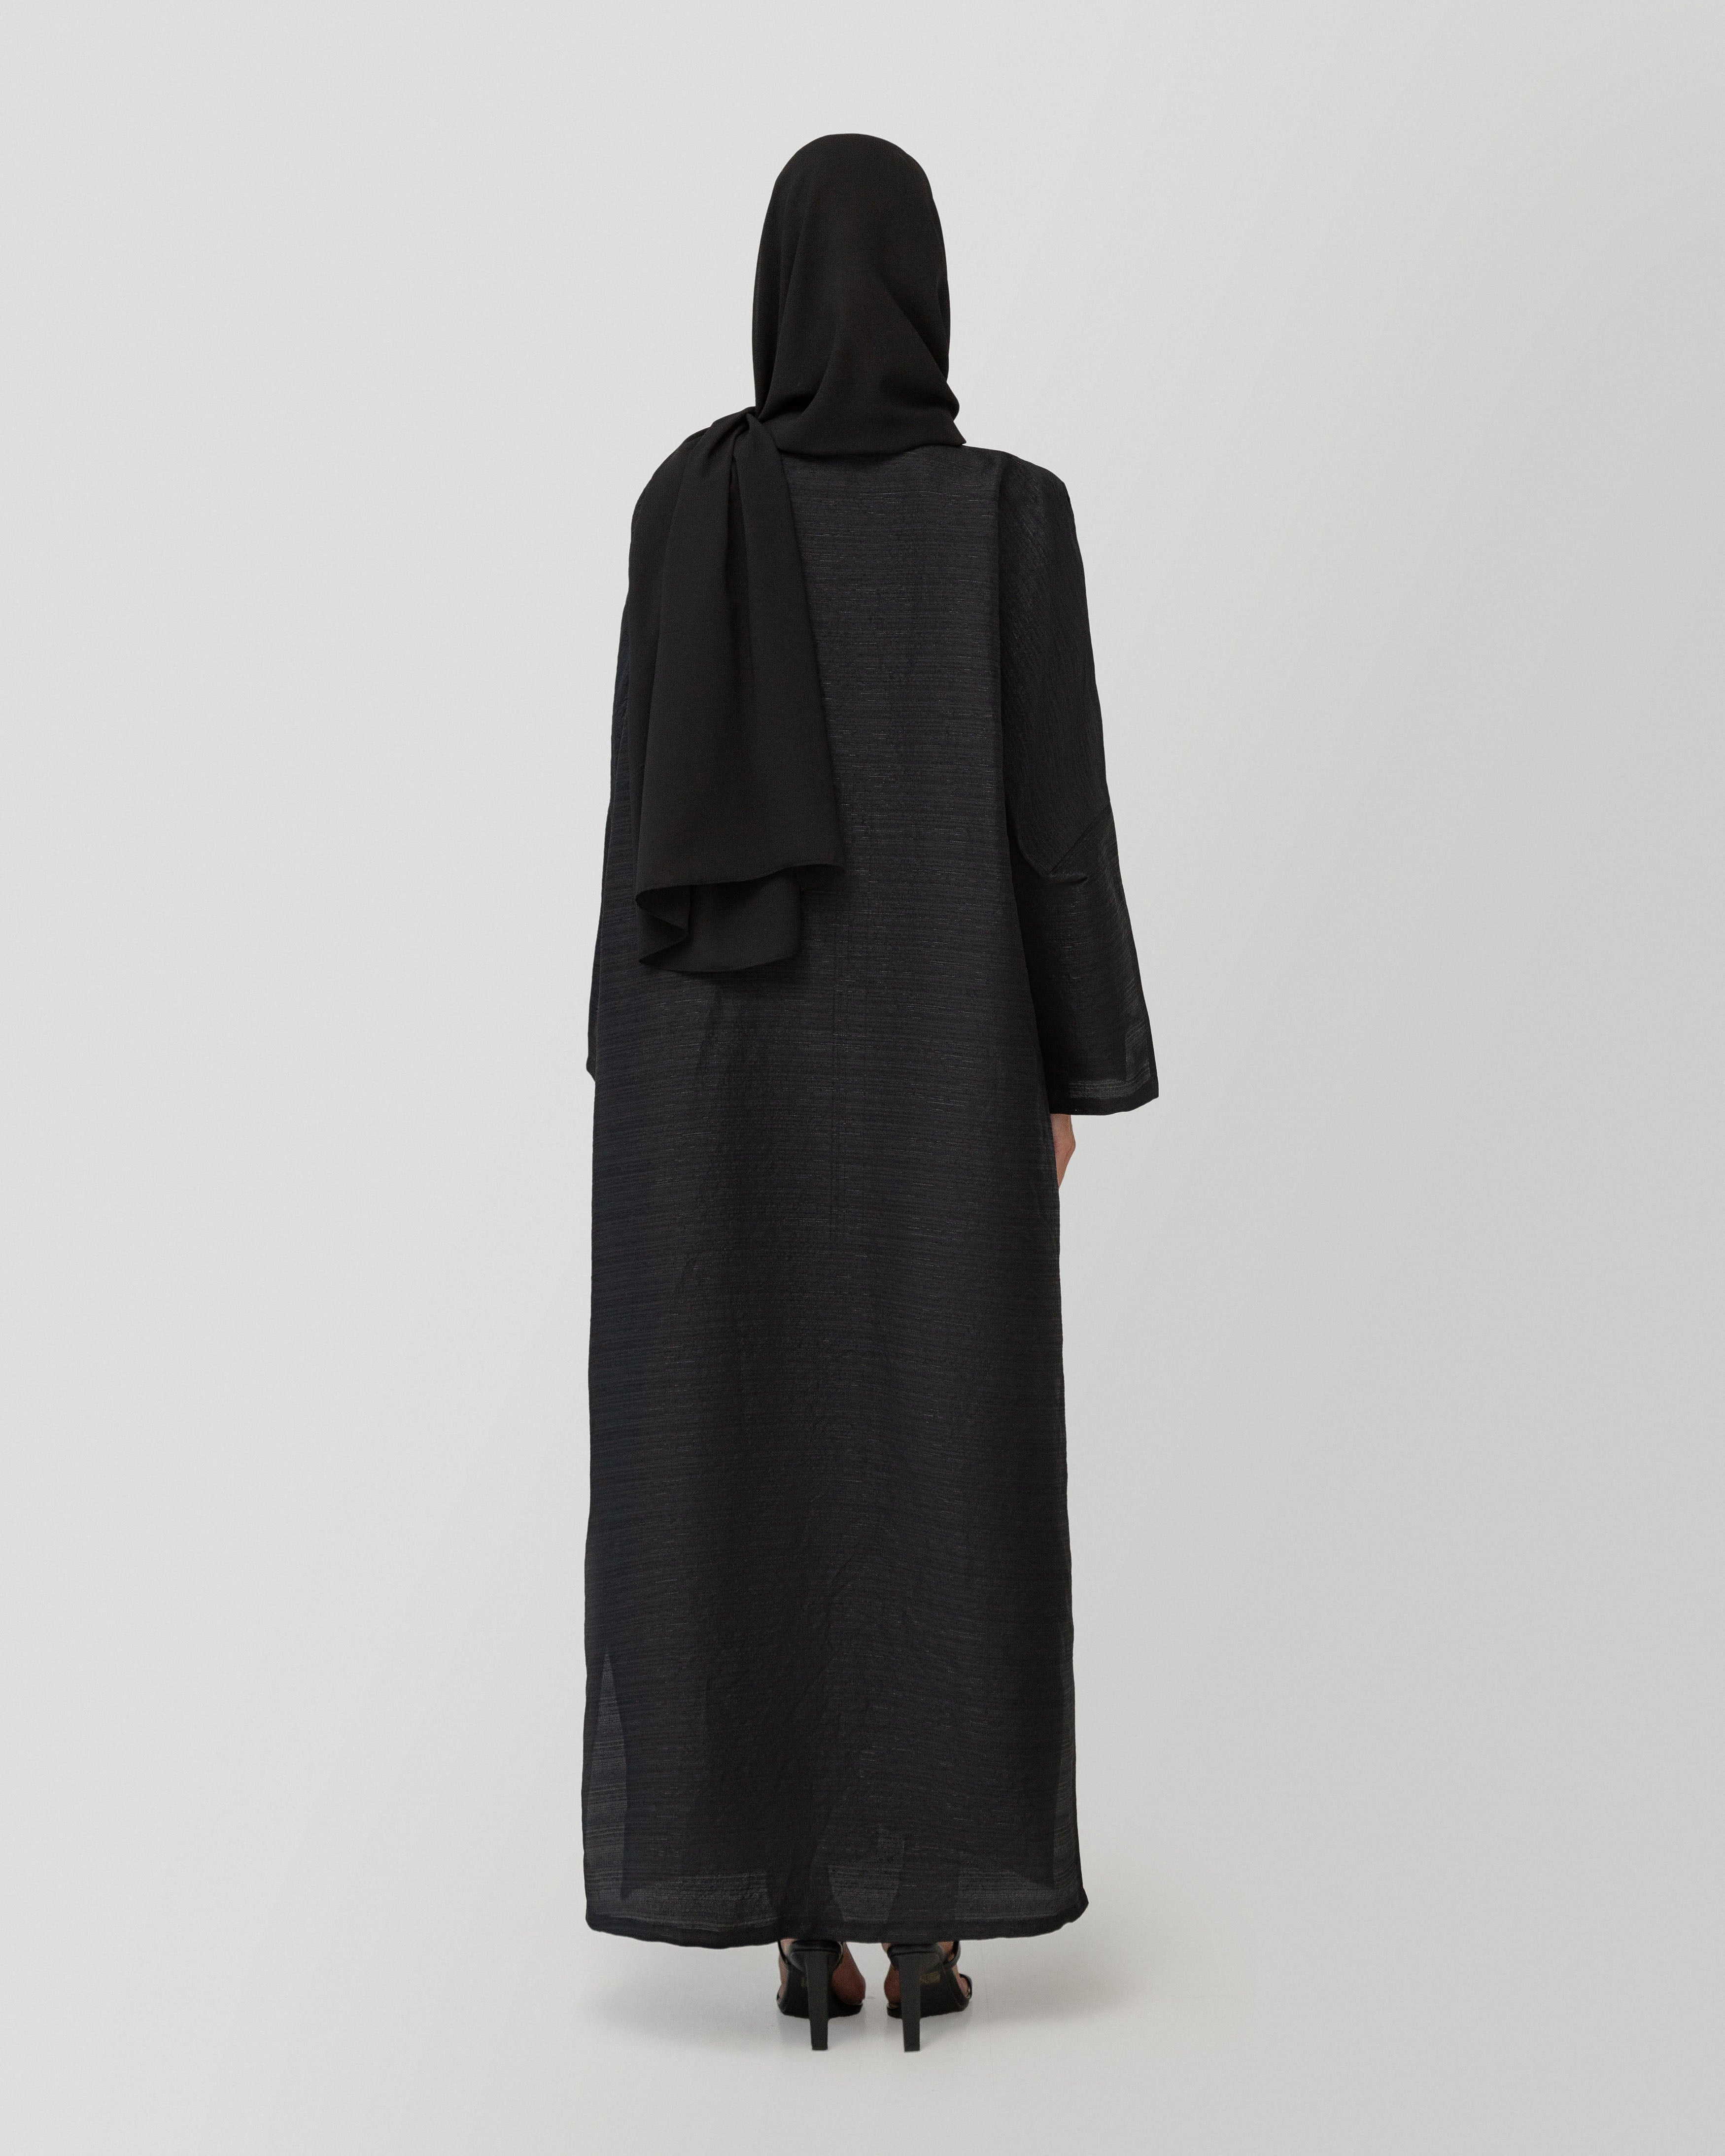 Iman Abaya in Midnight Black